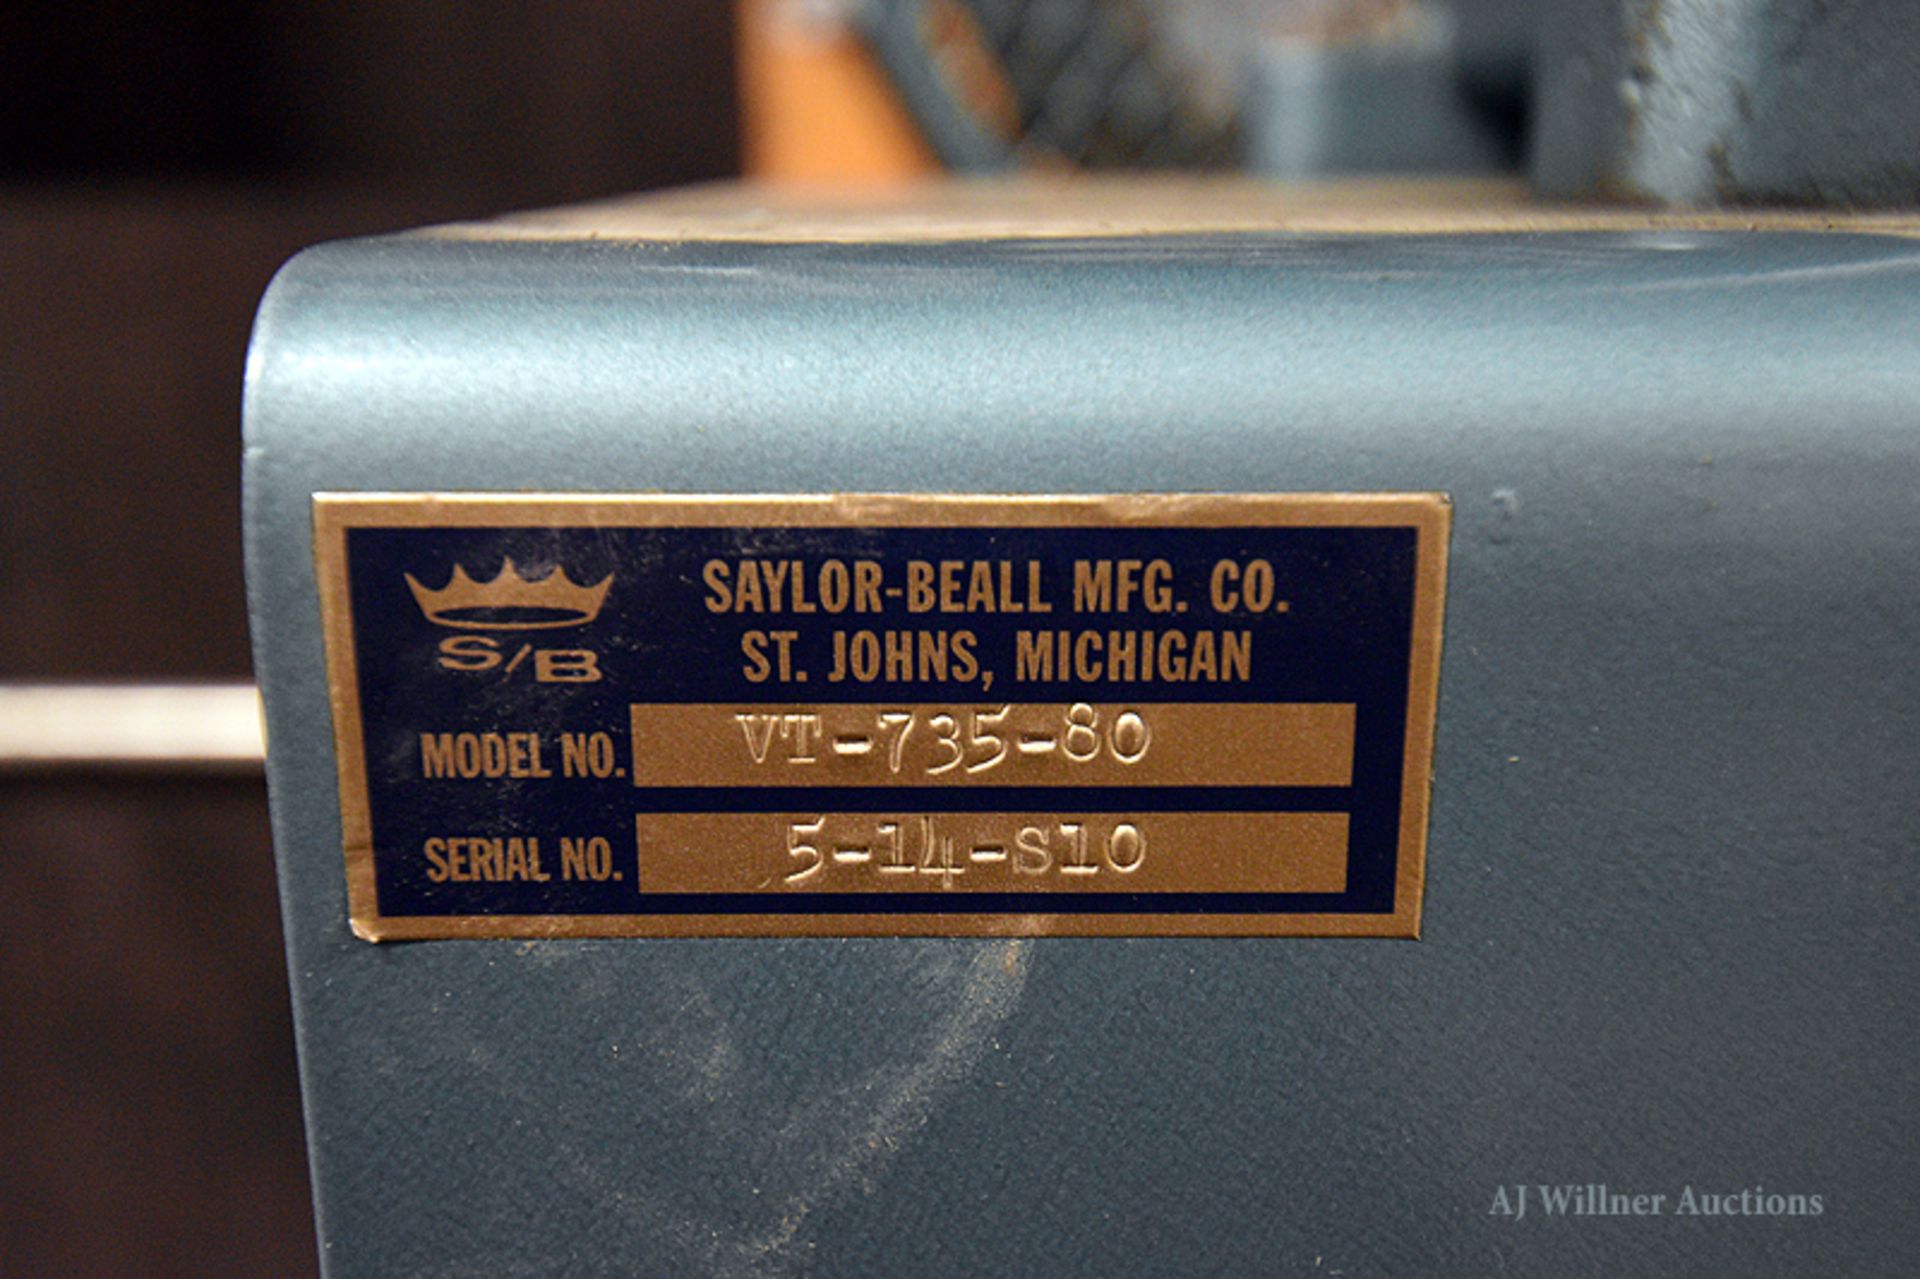 Saylor-Beall model VT-735-80 air compressor w/ 5 H.P. motor w/ vertical tank - Image 2 of 3